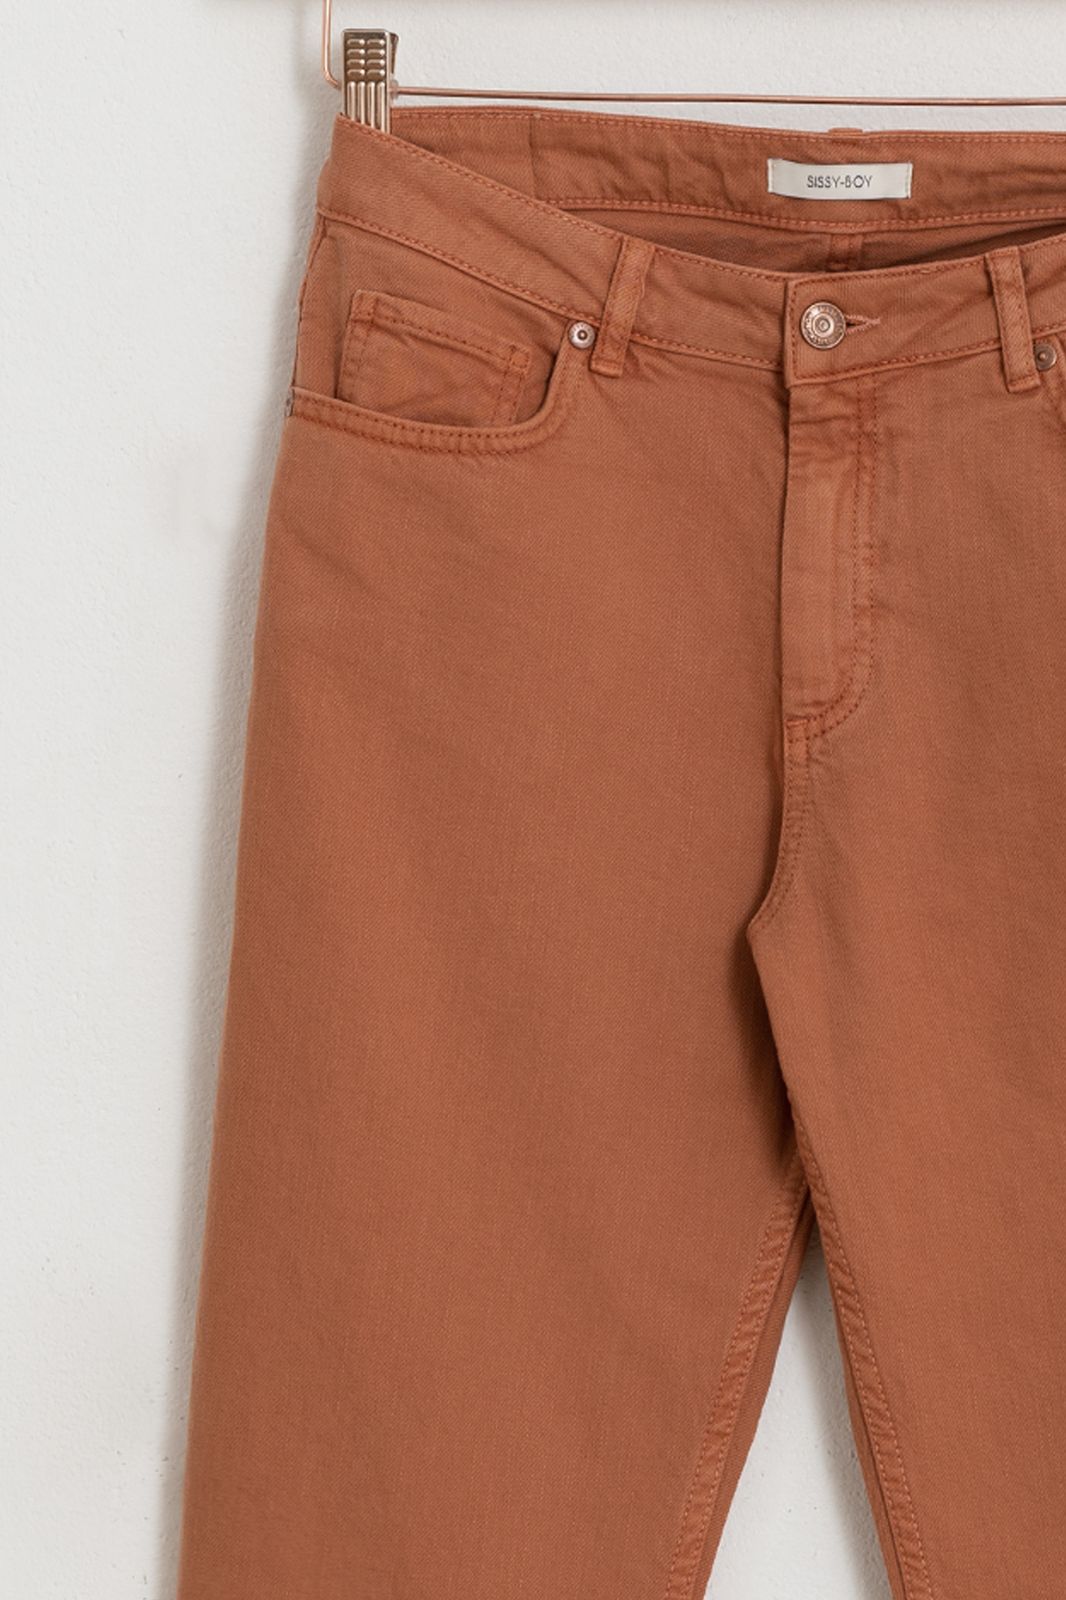 Bari orange tapered jeans